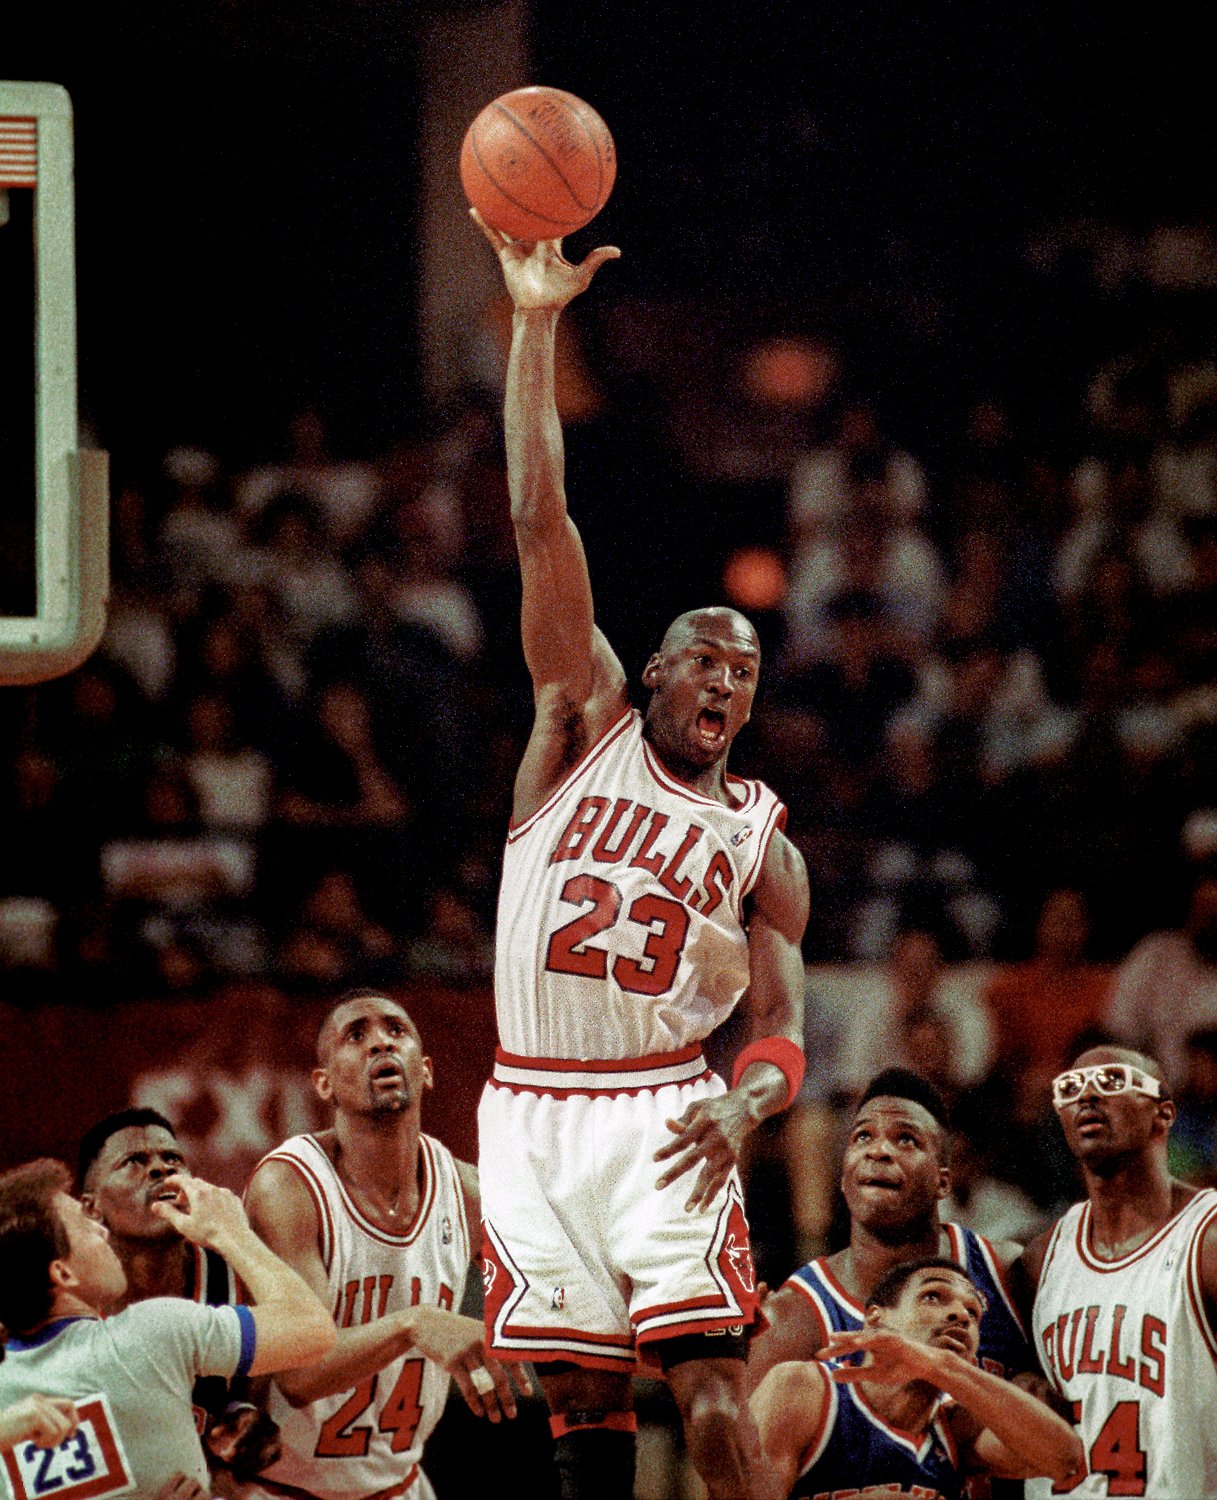  “Michael Jordan, Bulls” Chicago, IL 